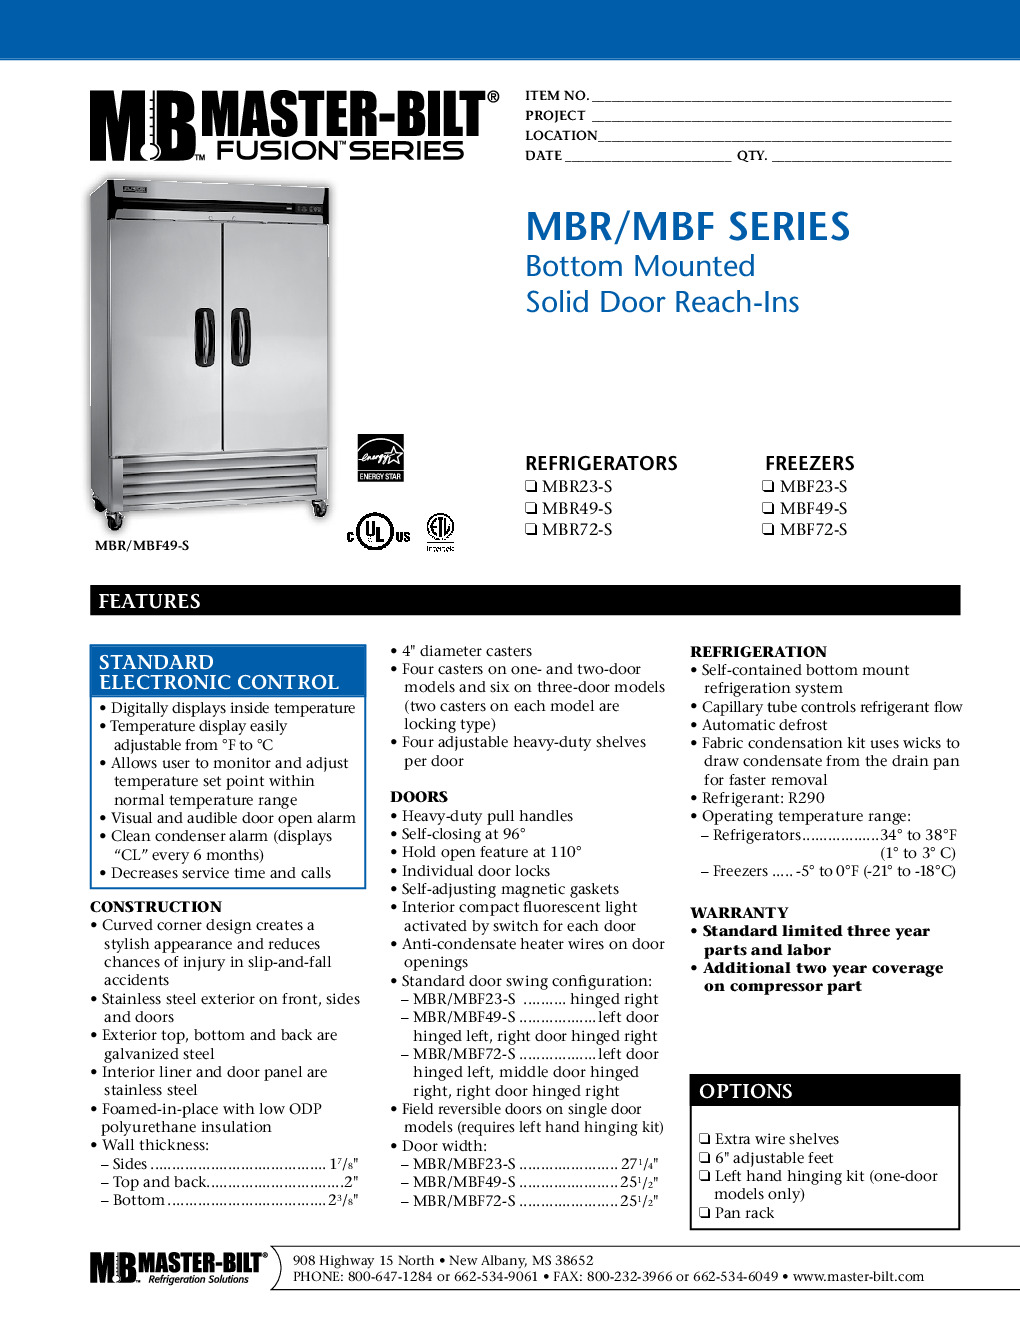 Master-Bilt MBR49-S Reach-In Refrigerator